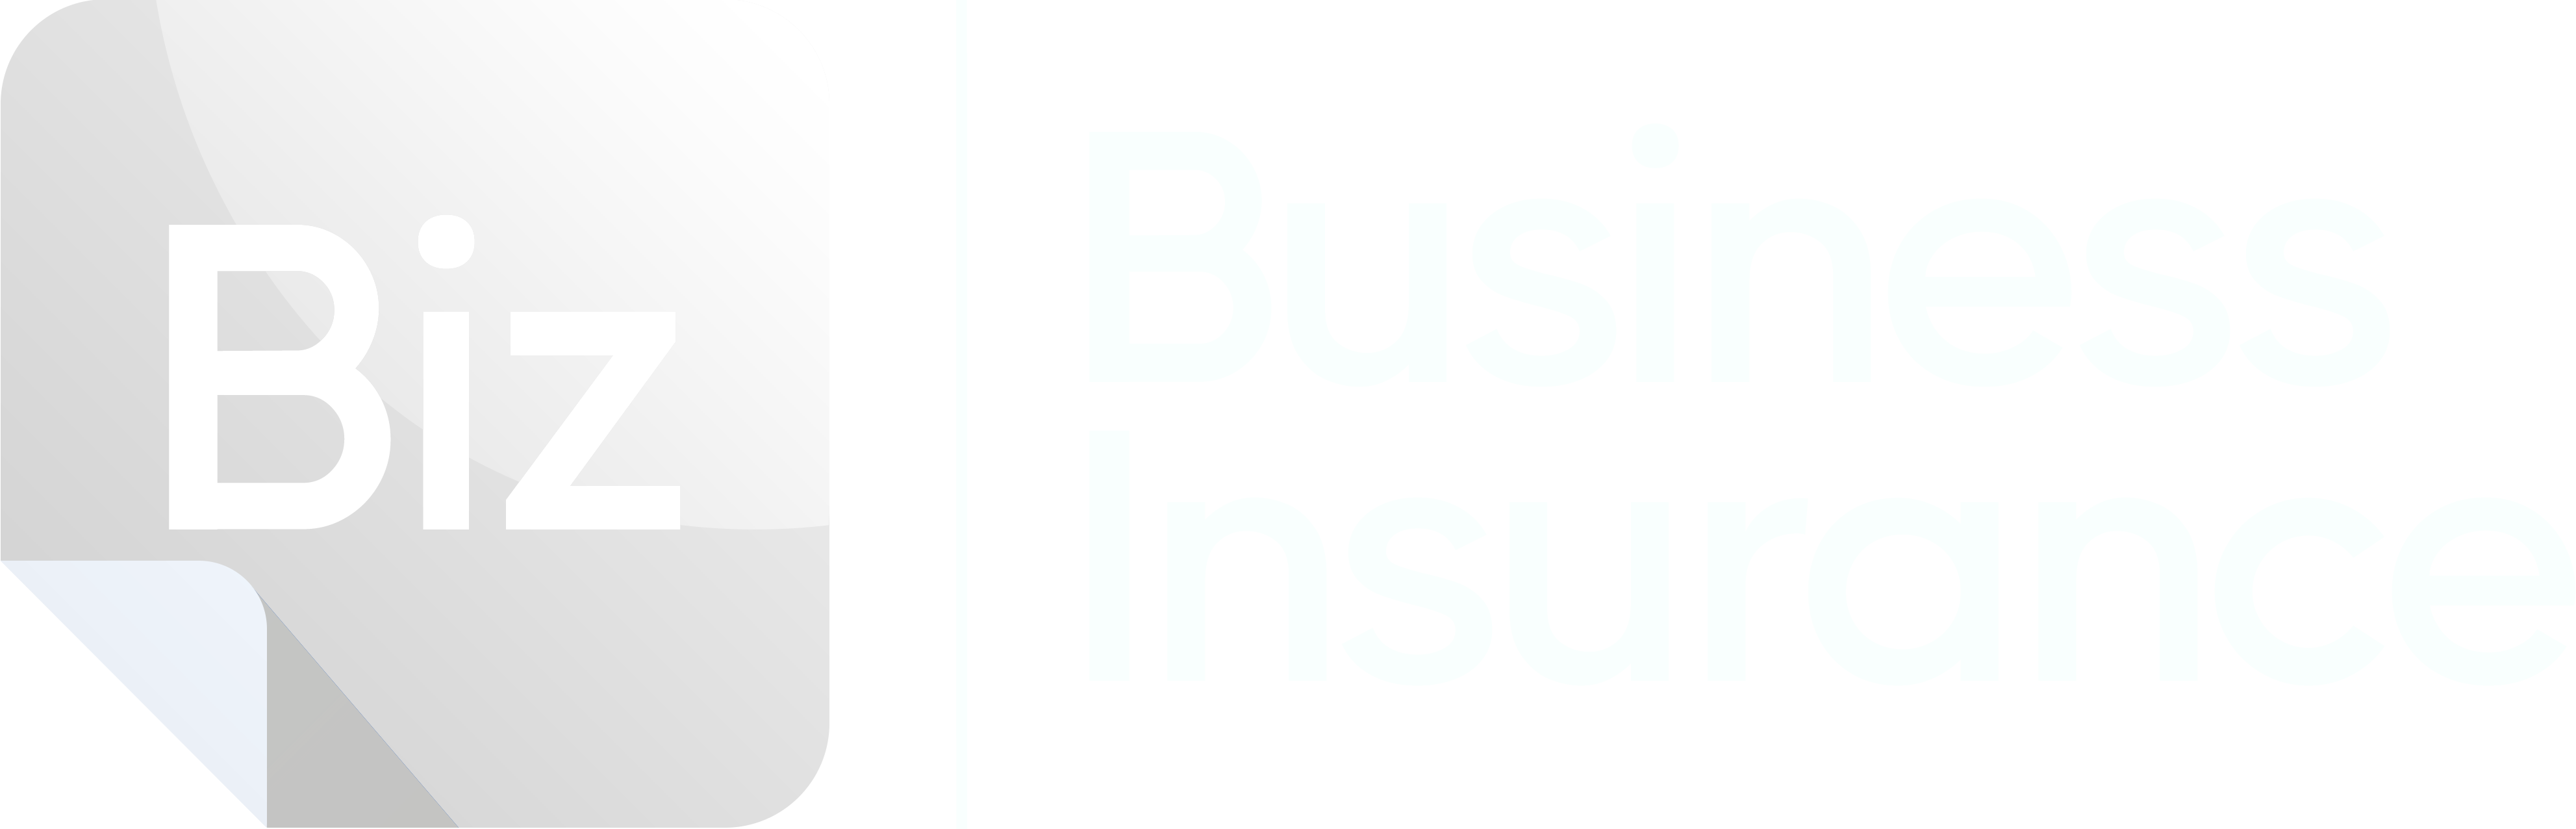 business insurance melbourne, sydney, perth, brisbane, adelaide